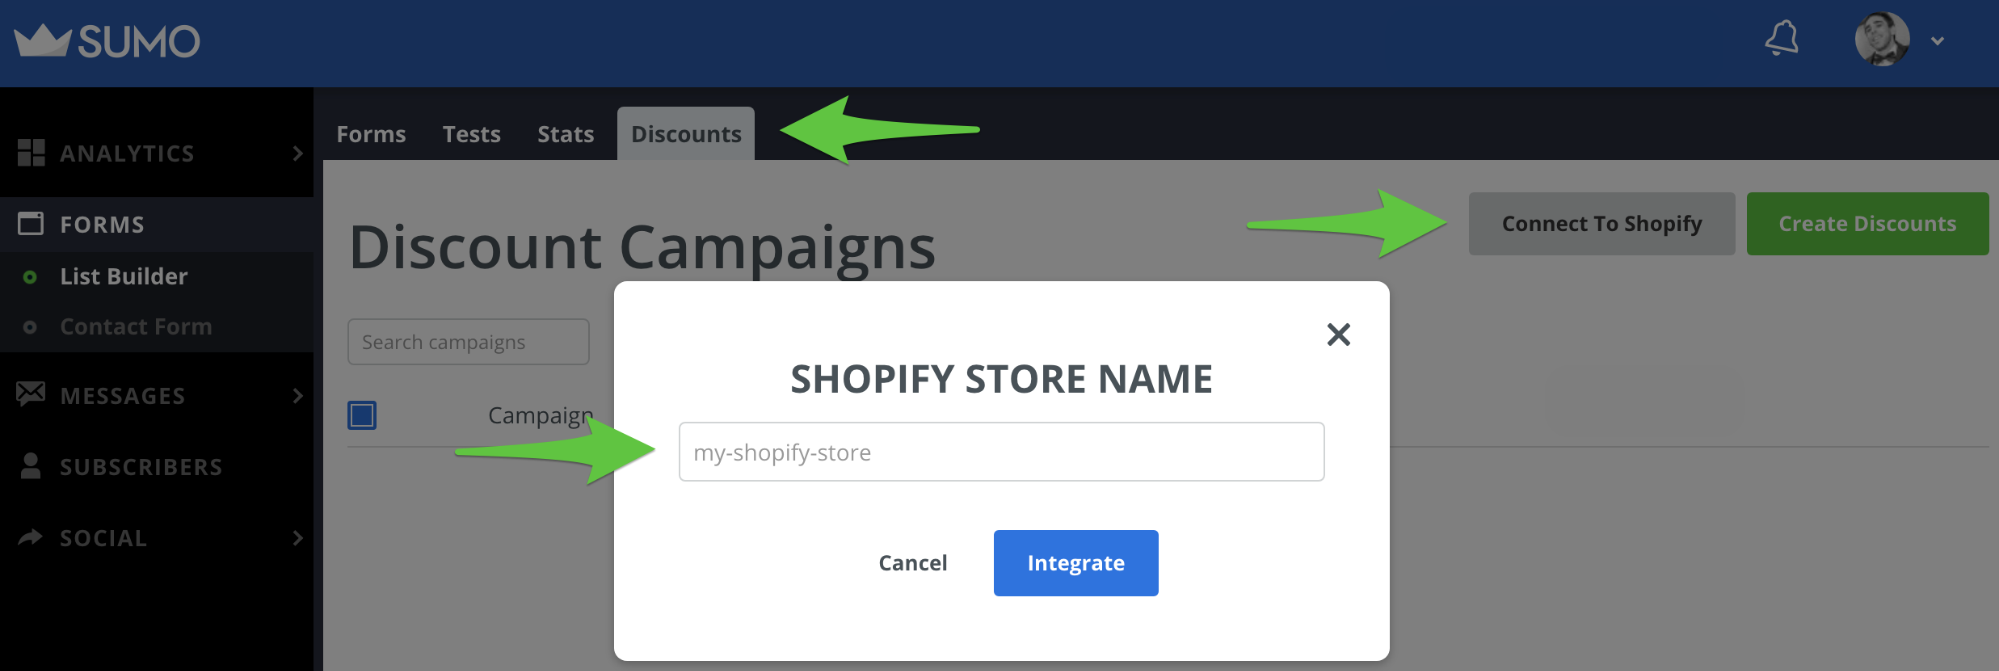 Screenshot showing Sumo discount campaigns